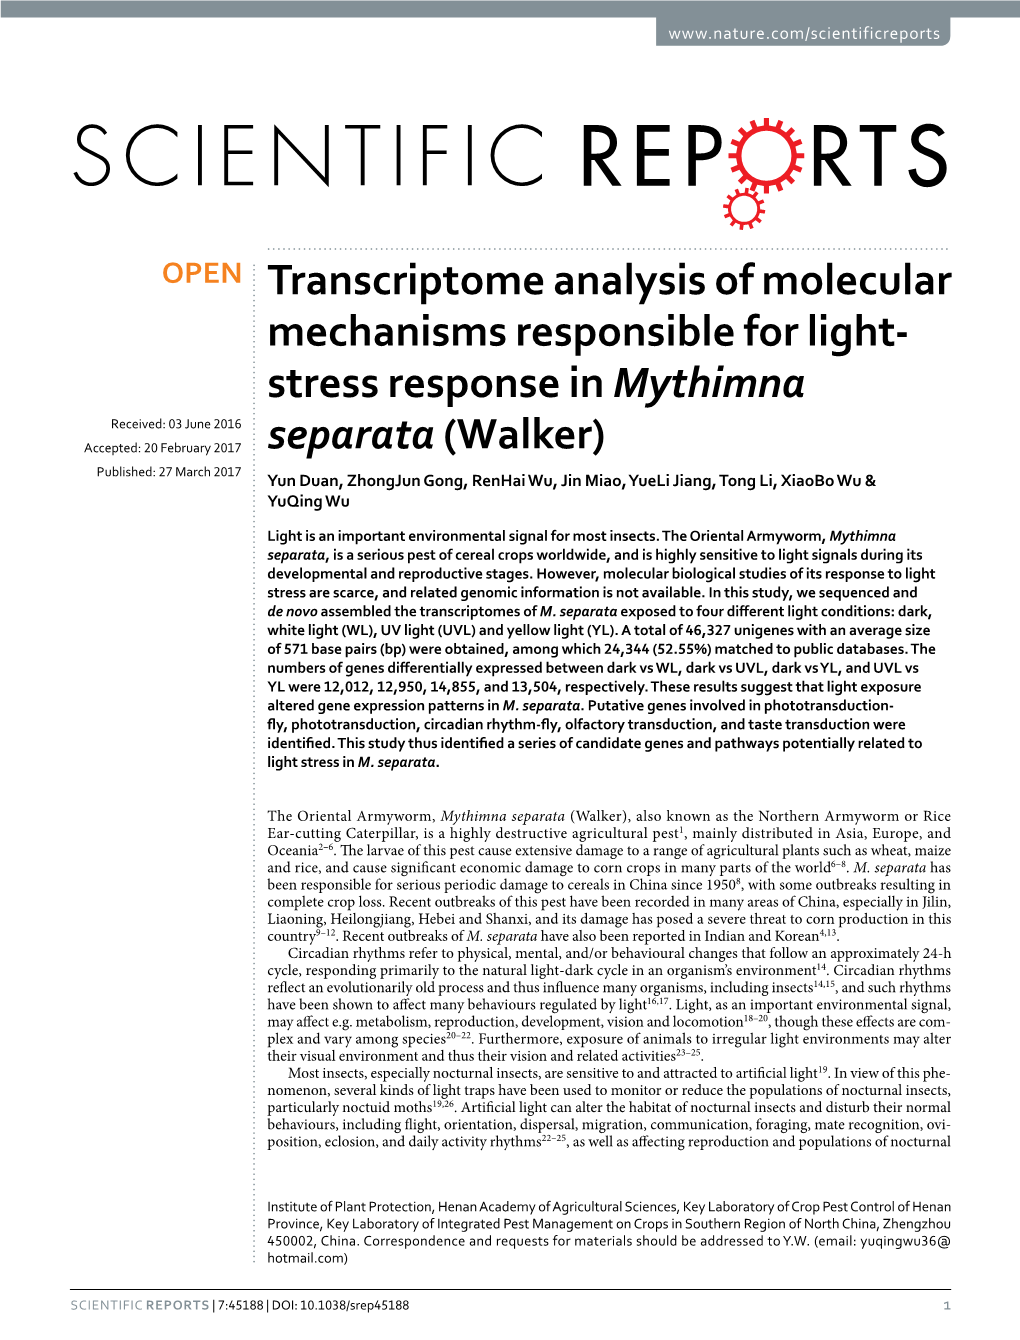 Transcriptome Analysis of Molecular Mechanisms Responsible for Light-Stress Response in Mythimna Separata (Walker)